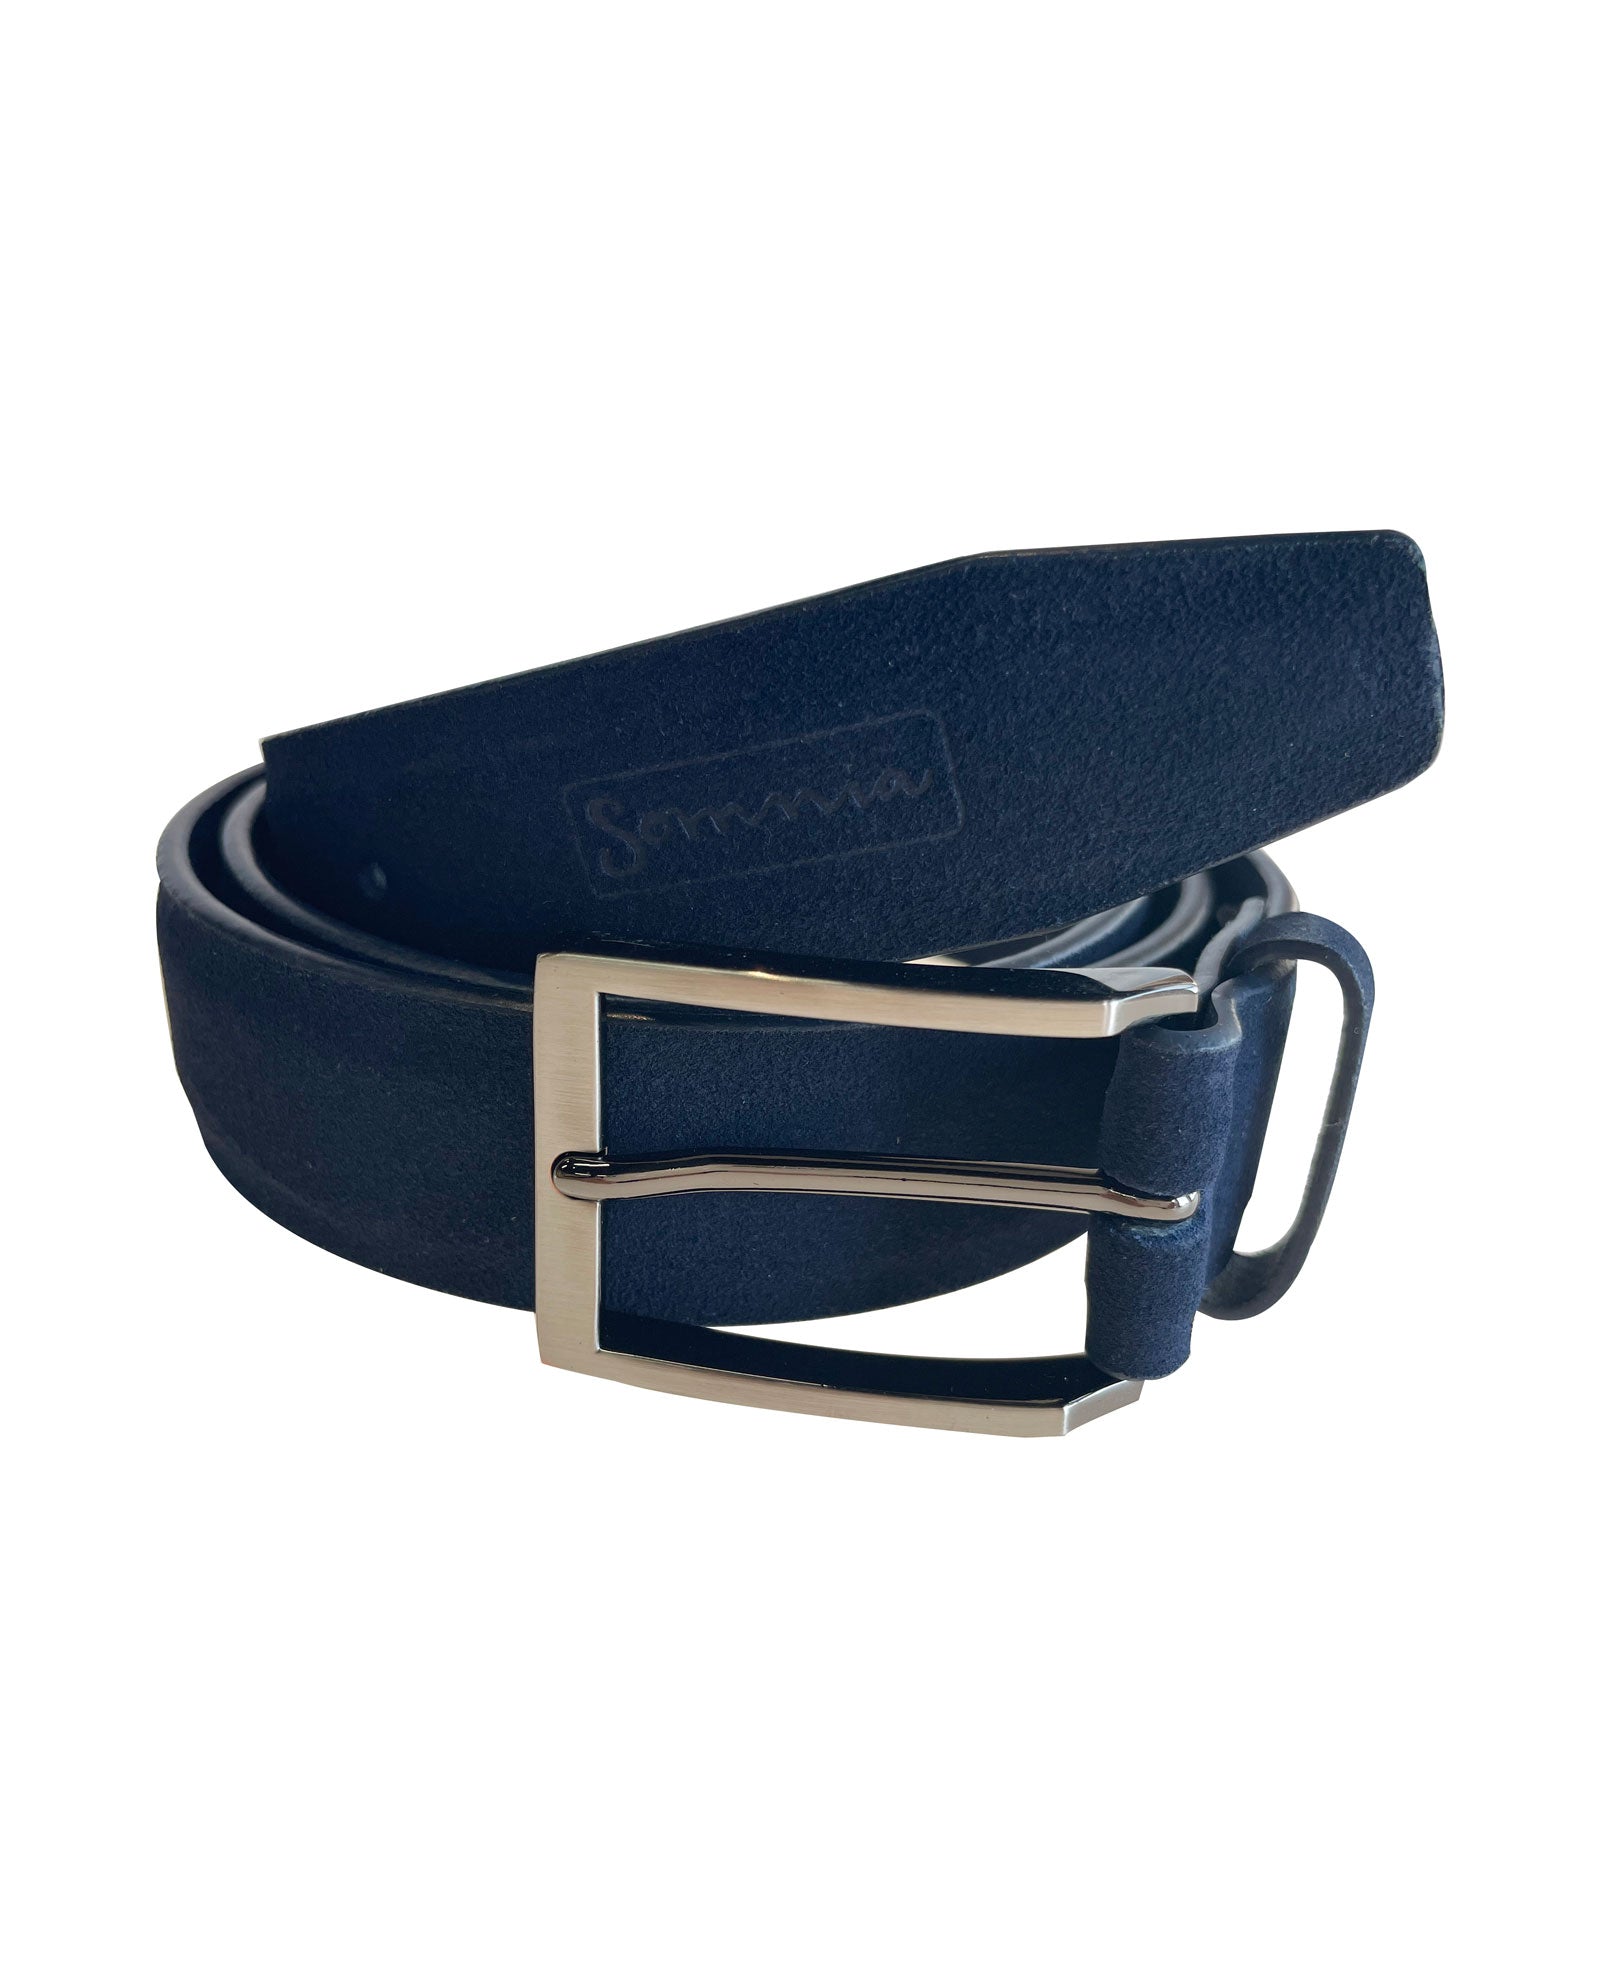 Marine Suede Leather Belt